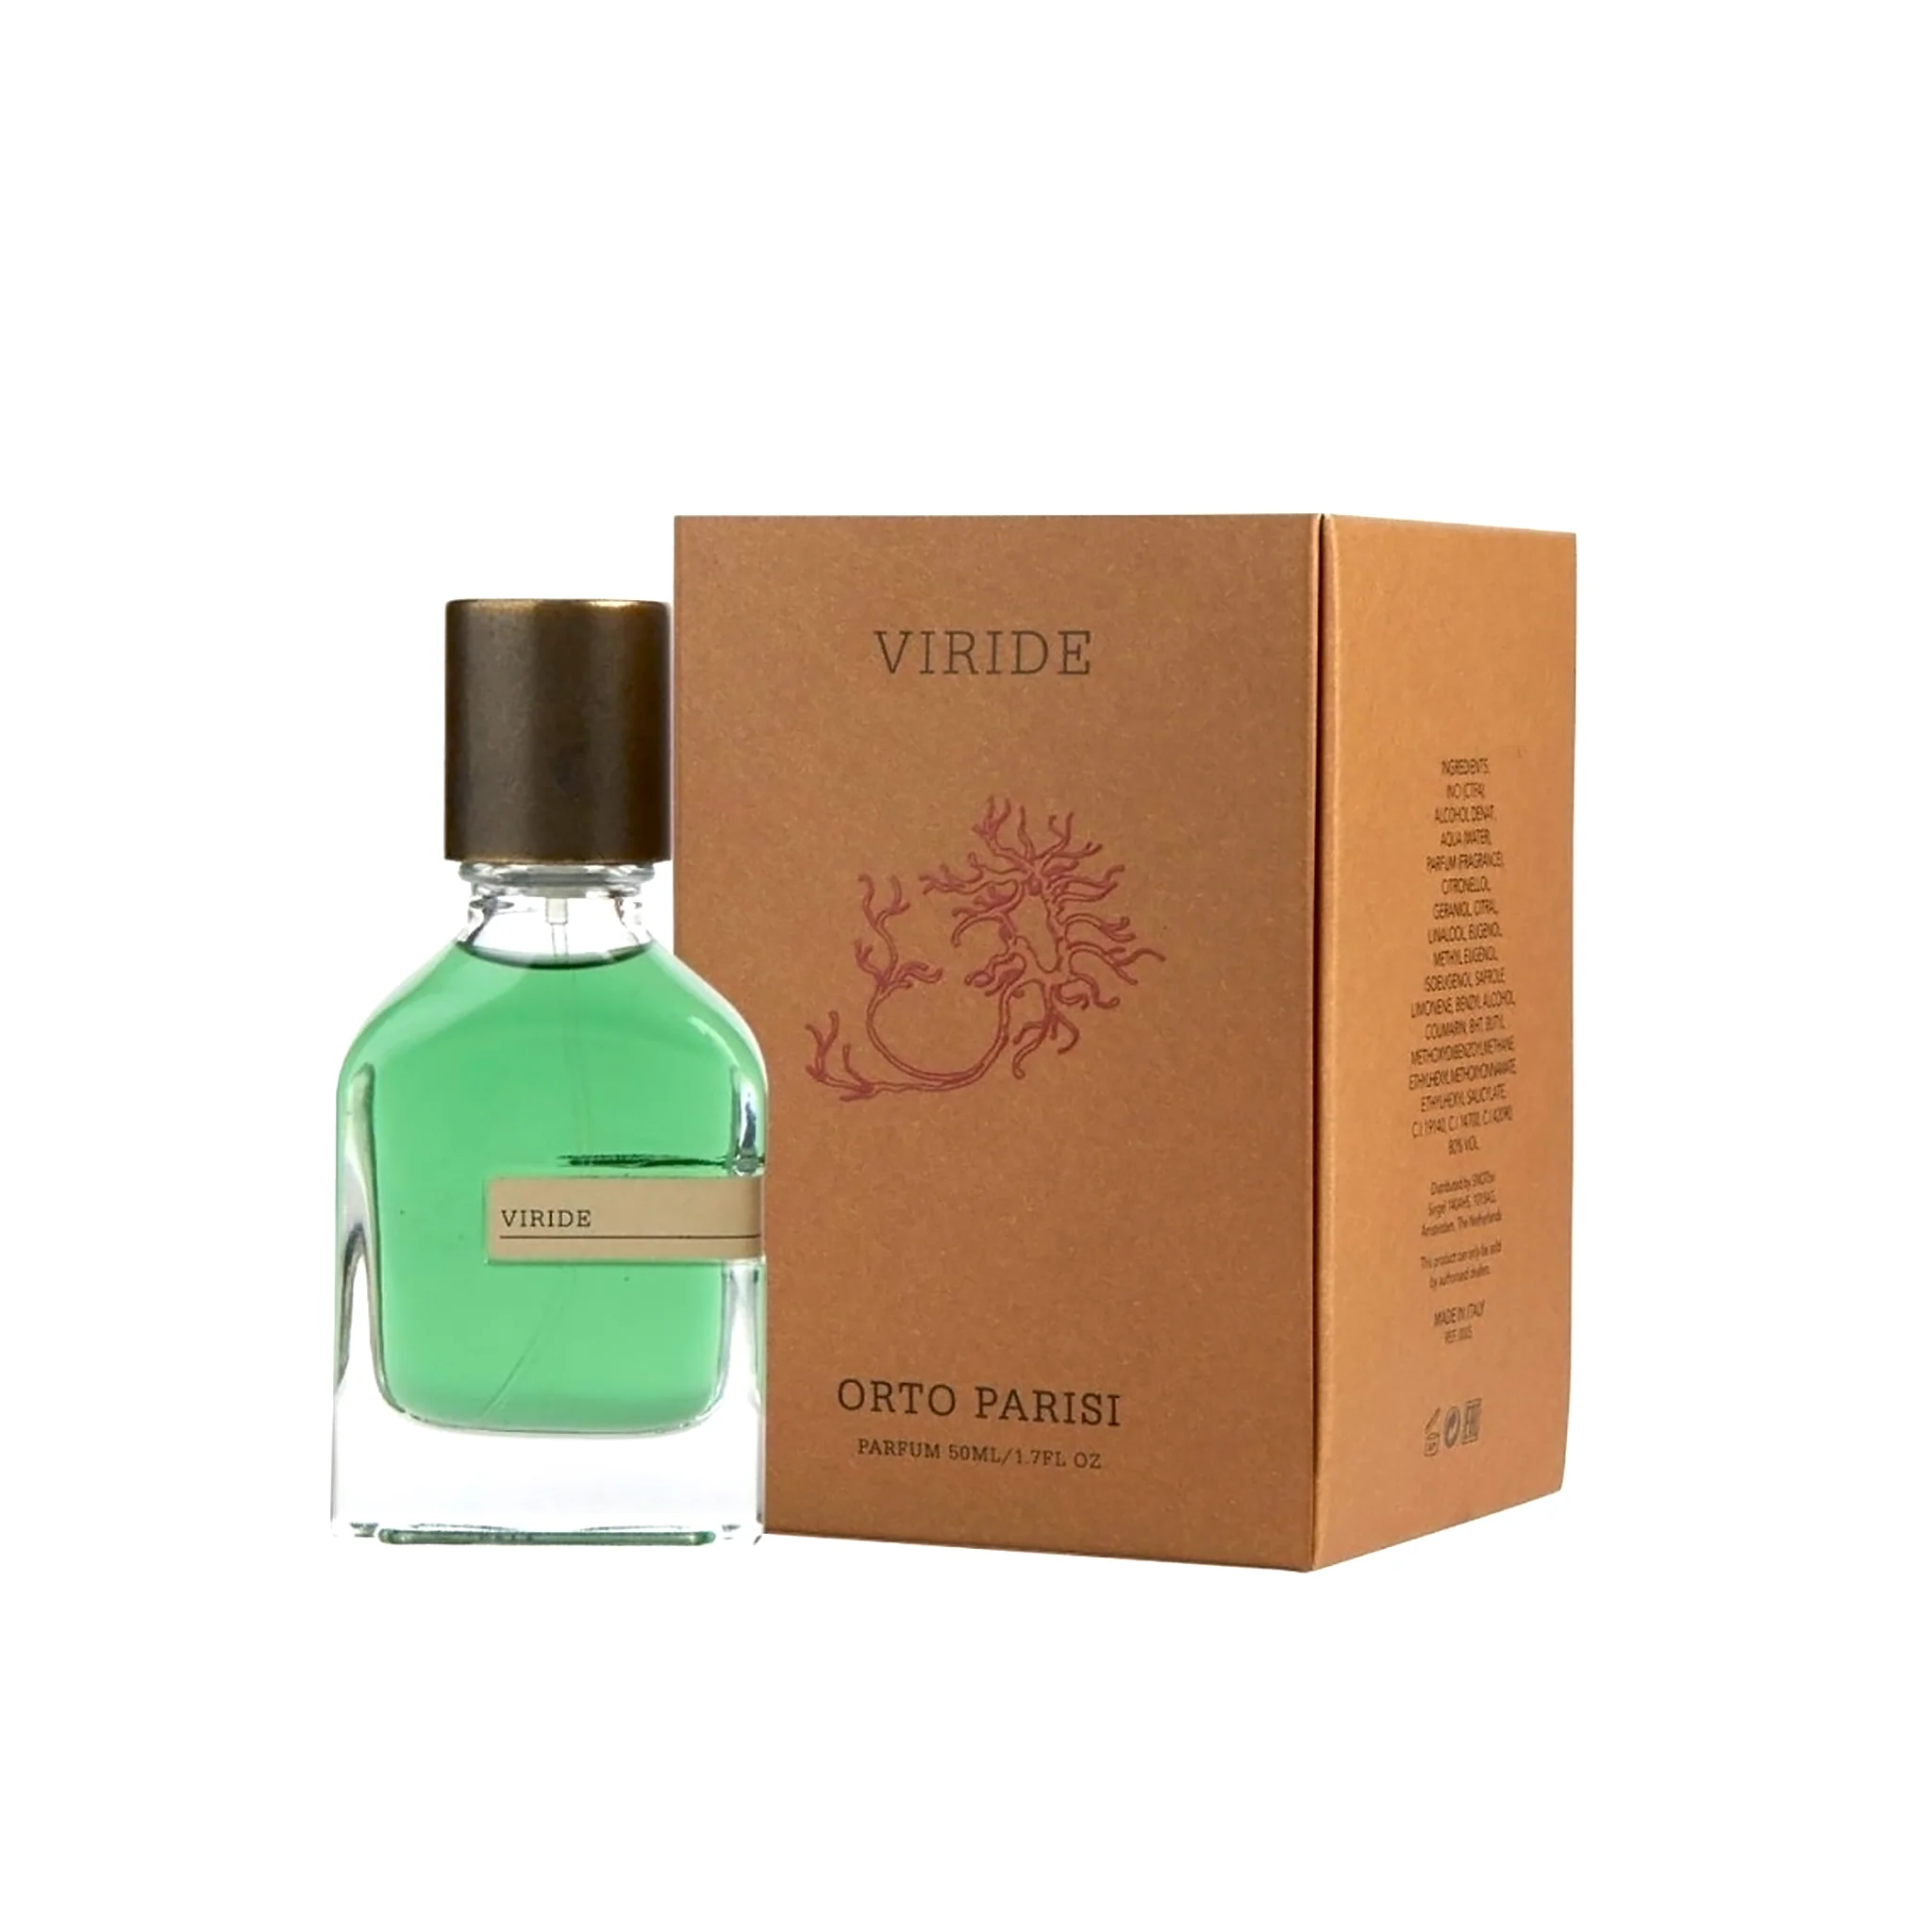 Image of Orto Parisi Viride - Parfum 50 ml